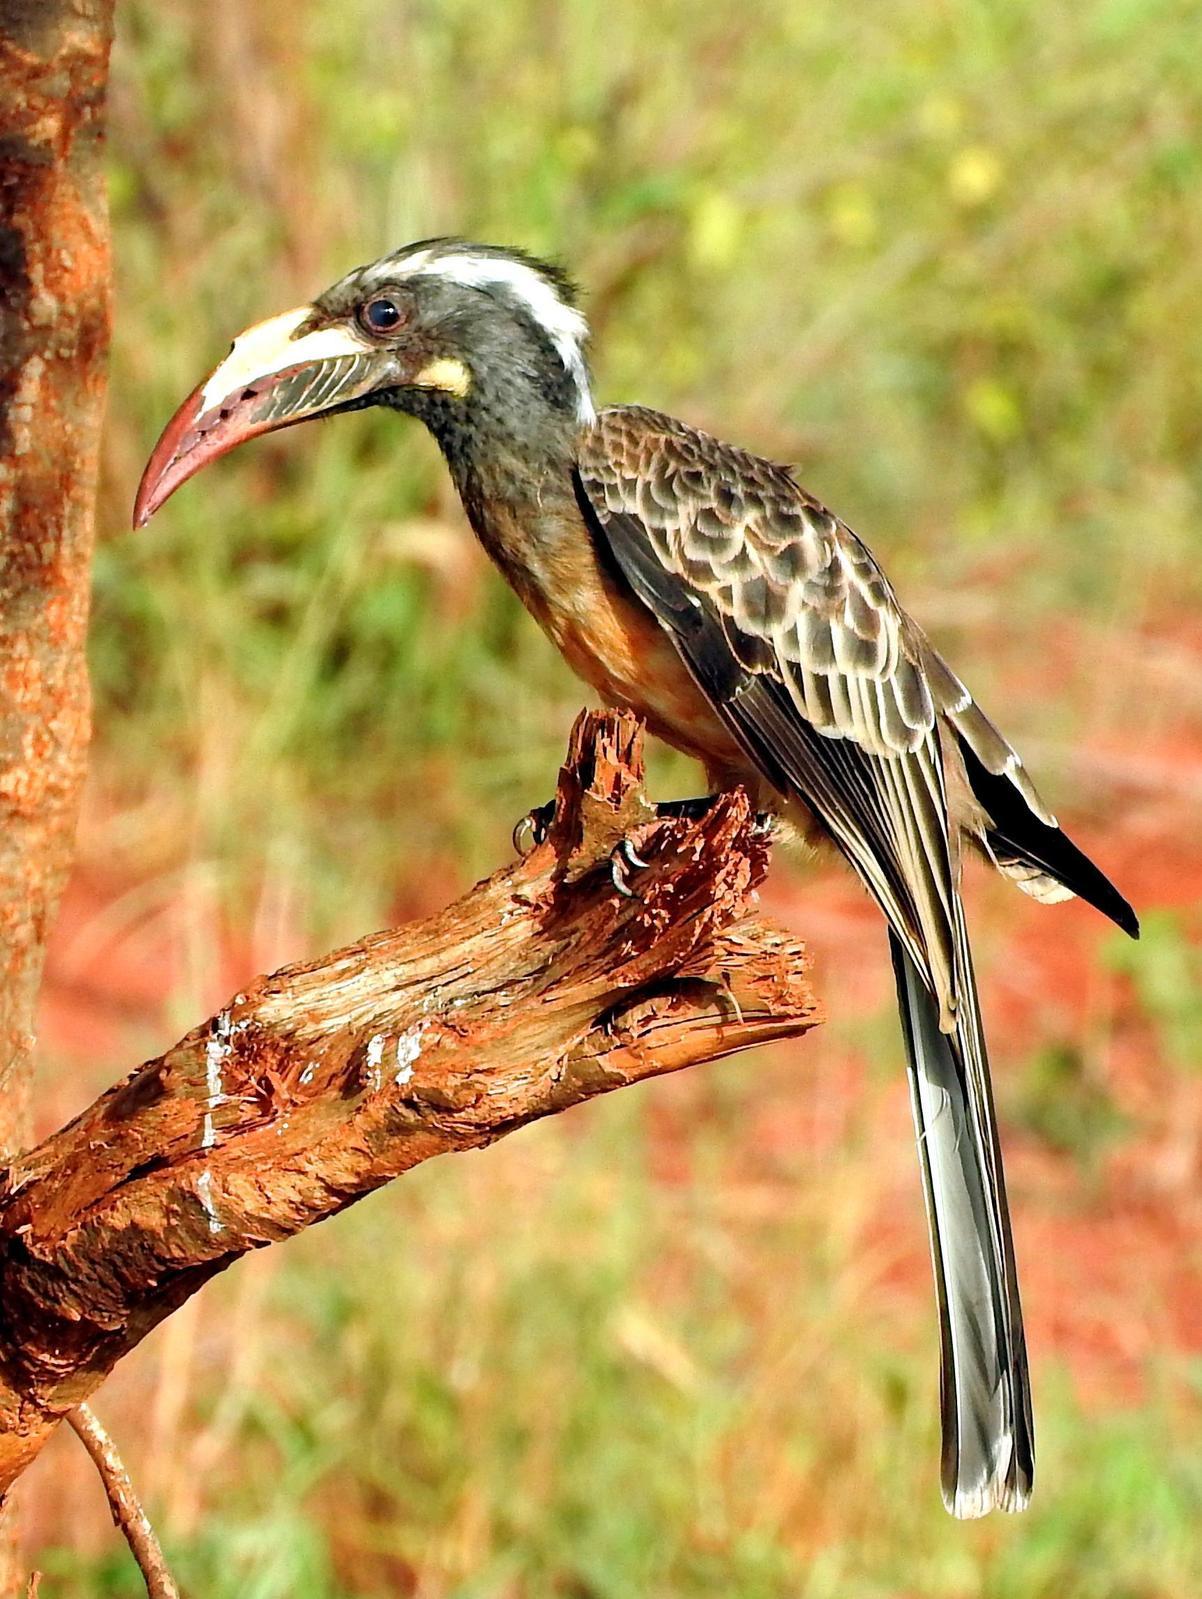 African Gray Hornbill Photo by Todd A. Watkins